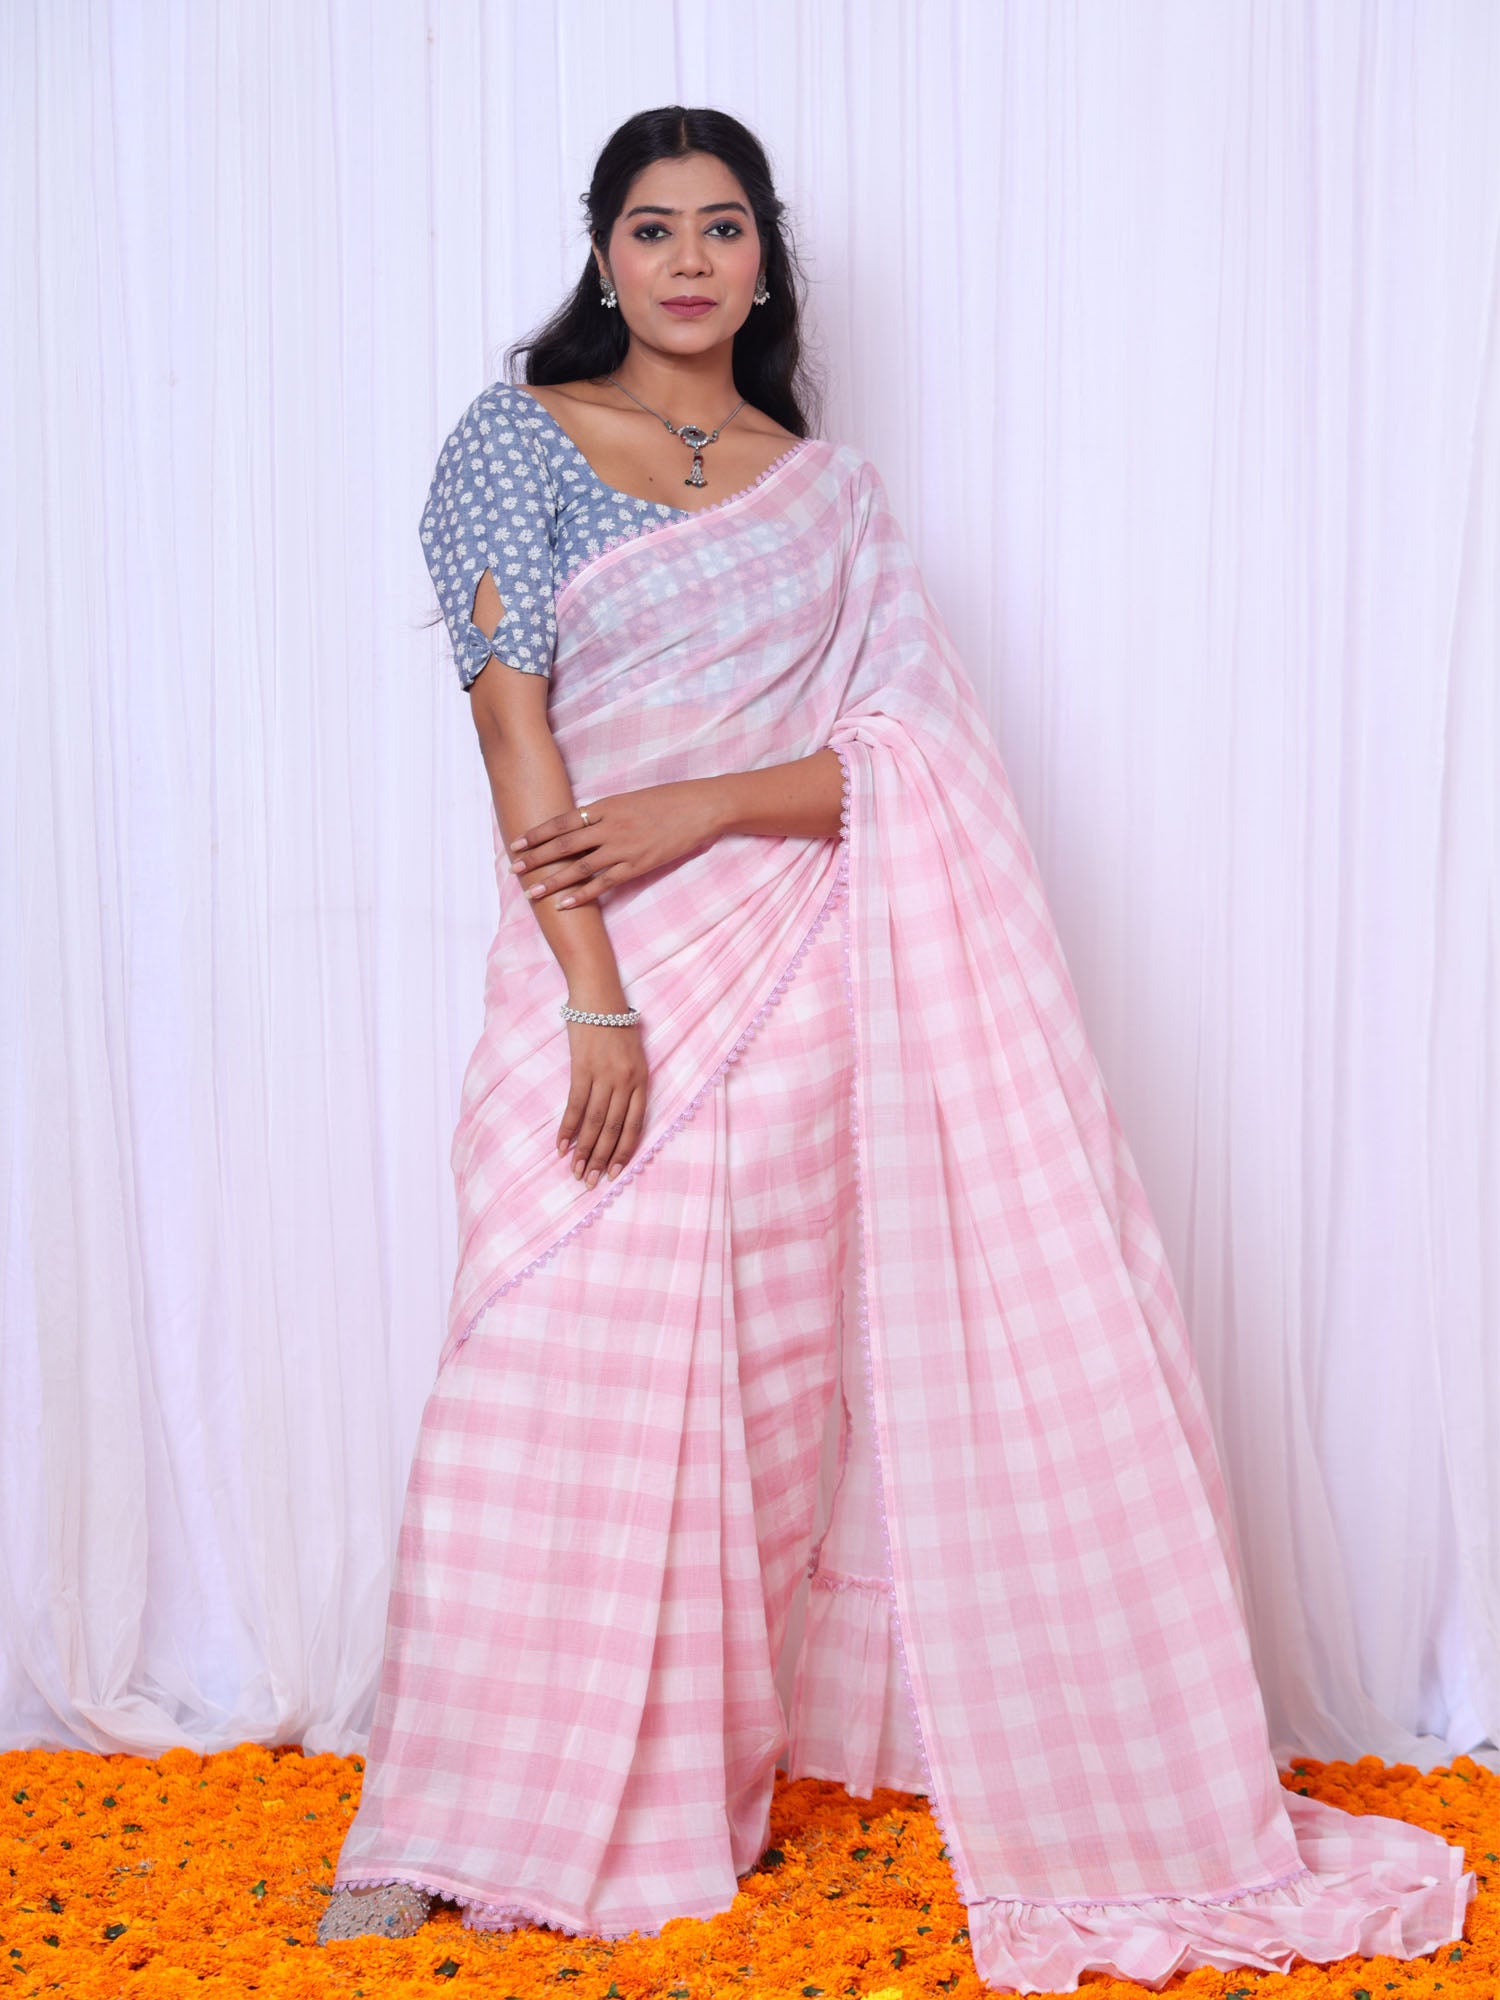 Pearly Maaney in a Brʌɪd de' Kerala Saree - Crochet On chest , Denim Blouse  | Elegant saree, Designer saree blouse patterns, Stylish sarees